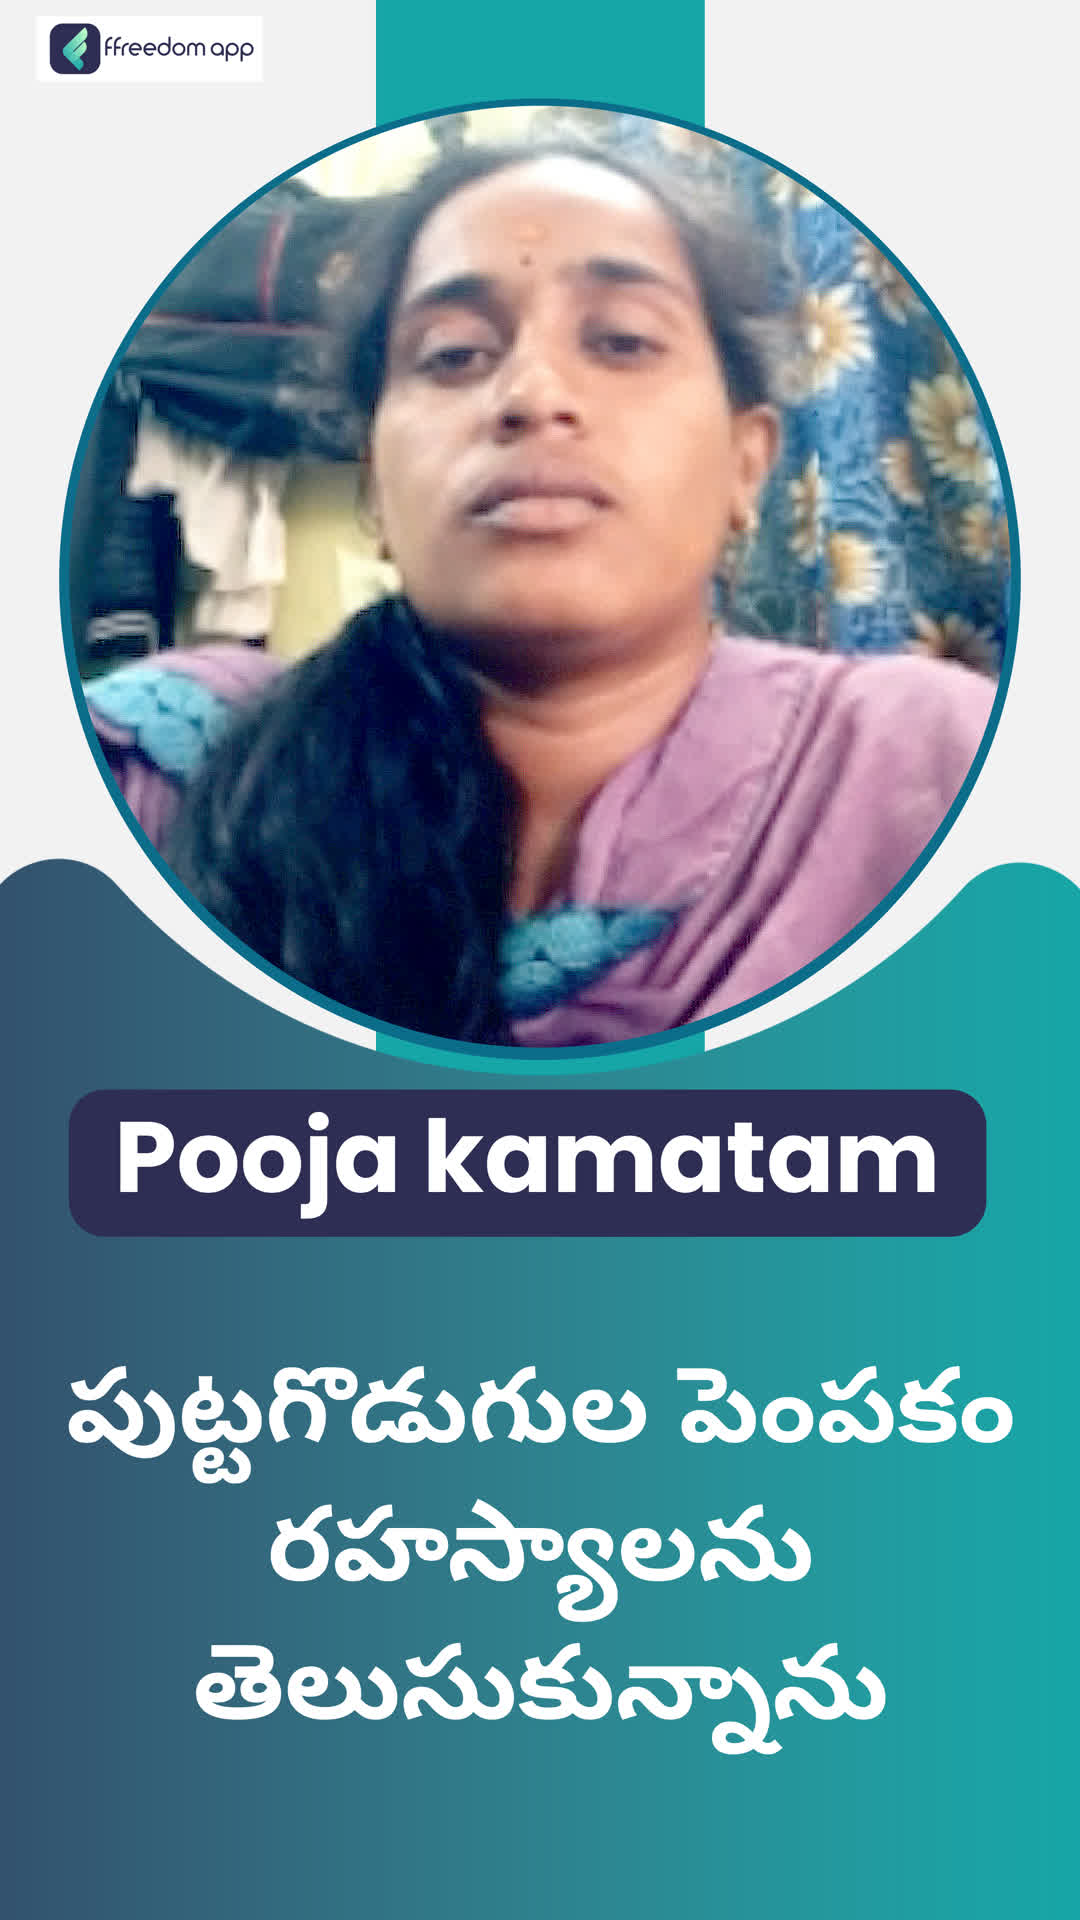 Pooja kamatam's Honest Review of ffreedom app - Kamareddy ,Telangana